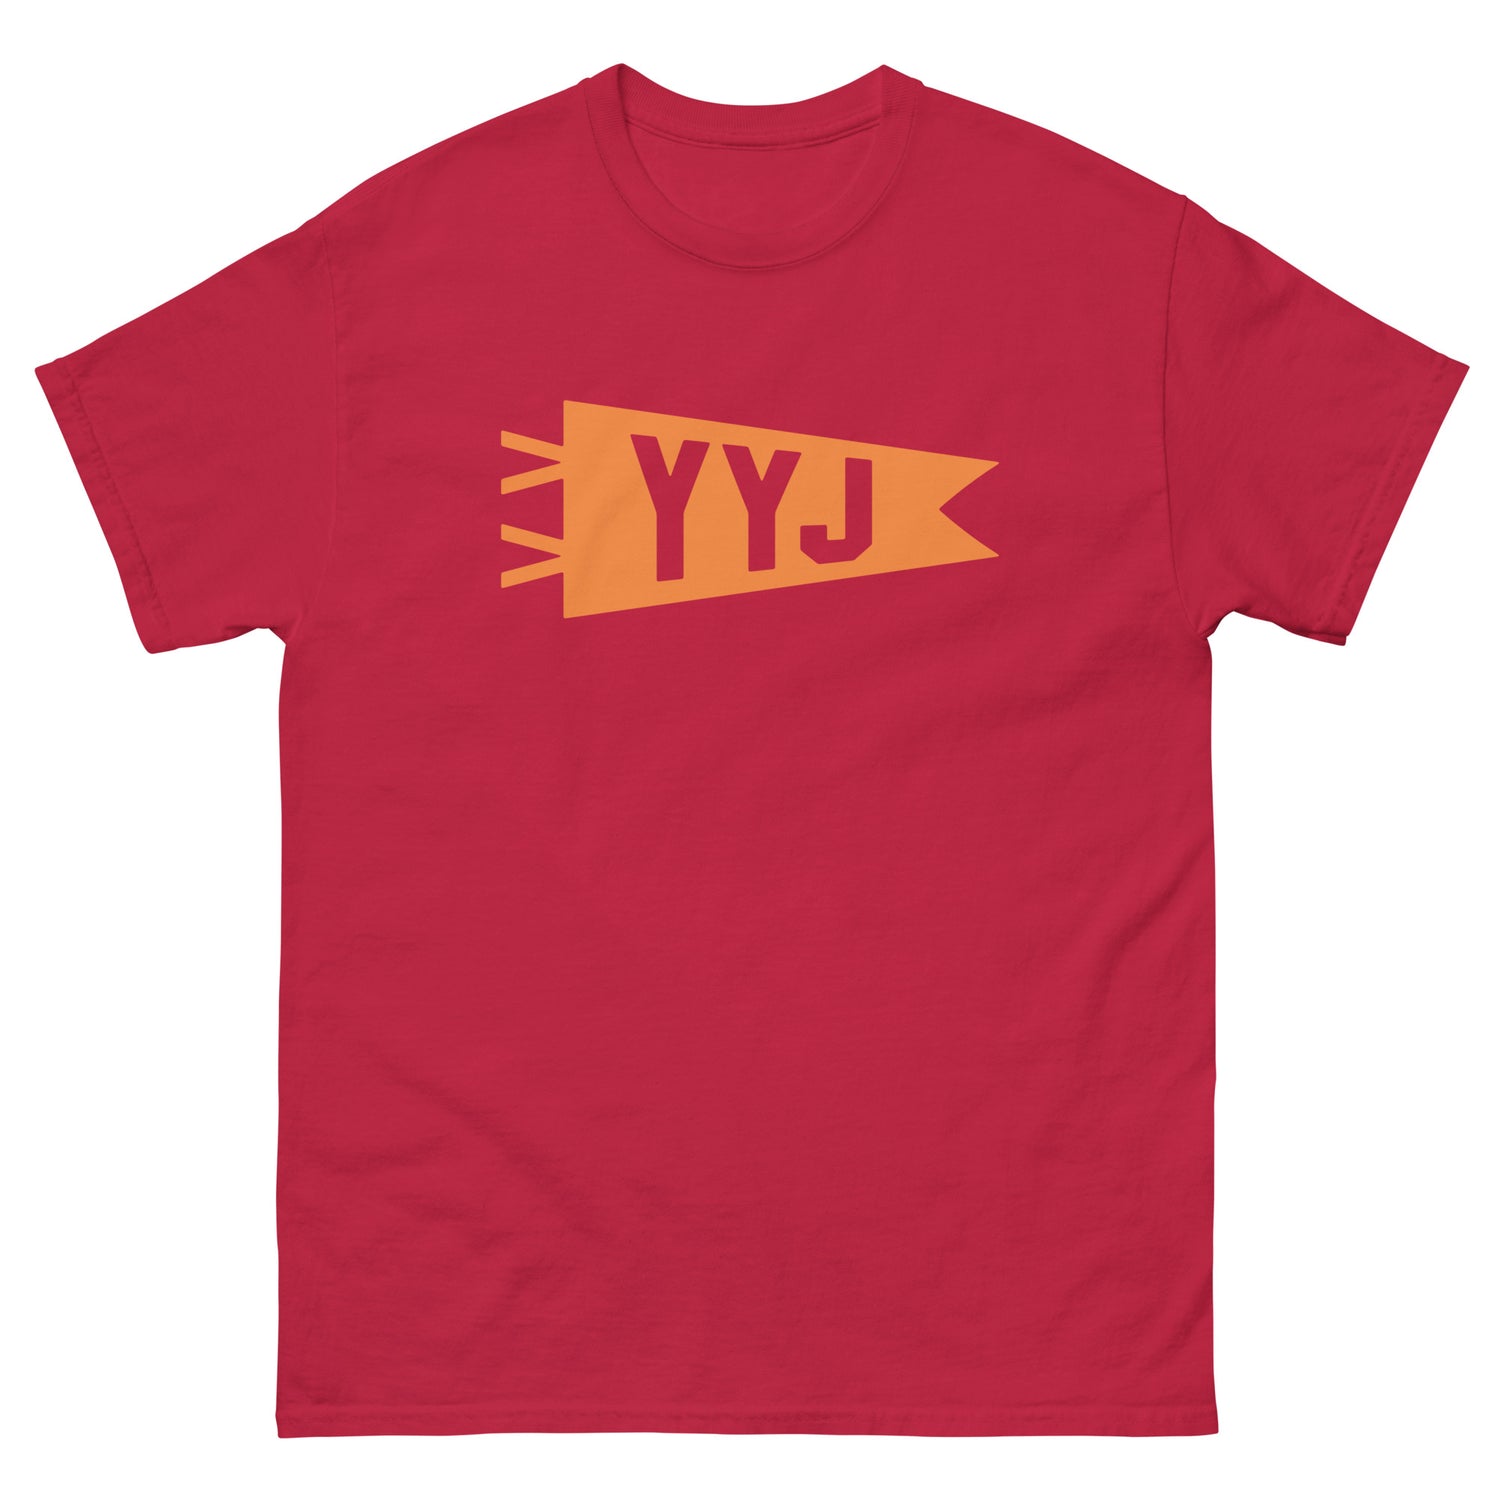 Victoria British Columbia Adult T-Shirts • YYJ Airport Code